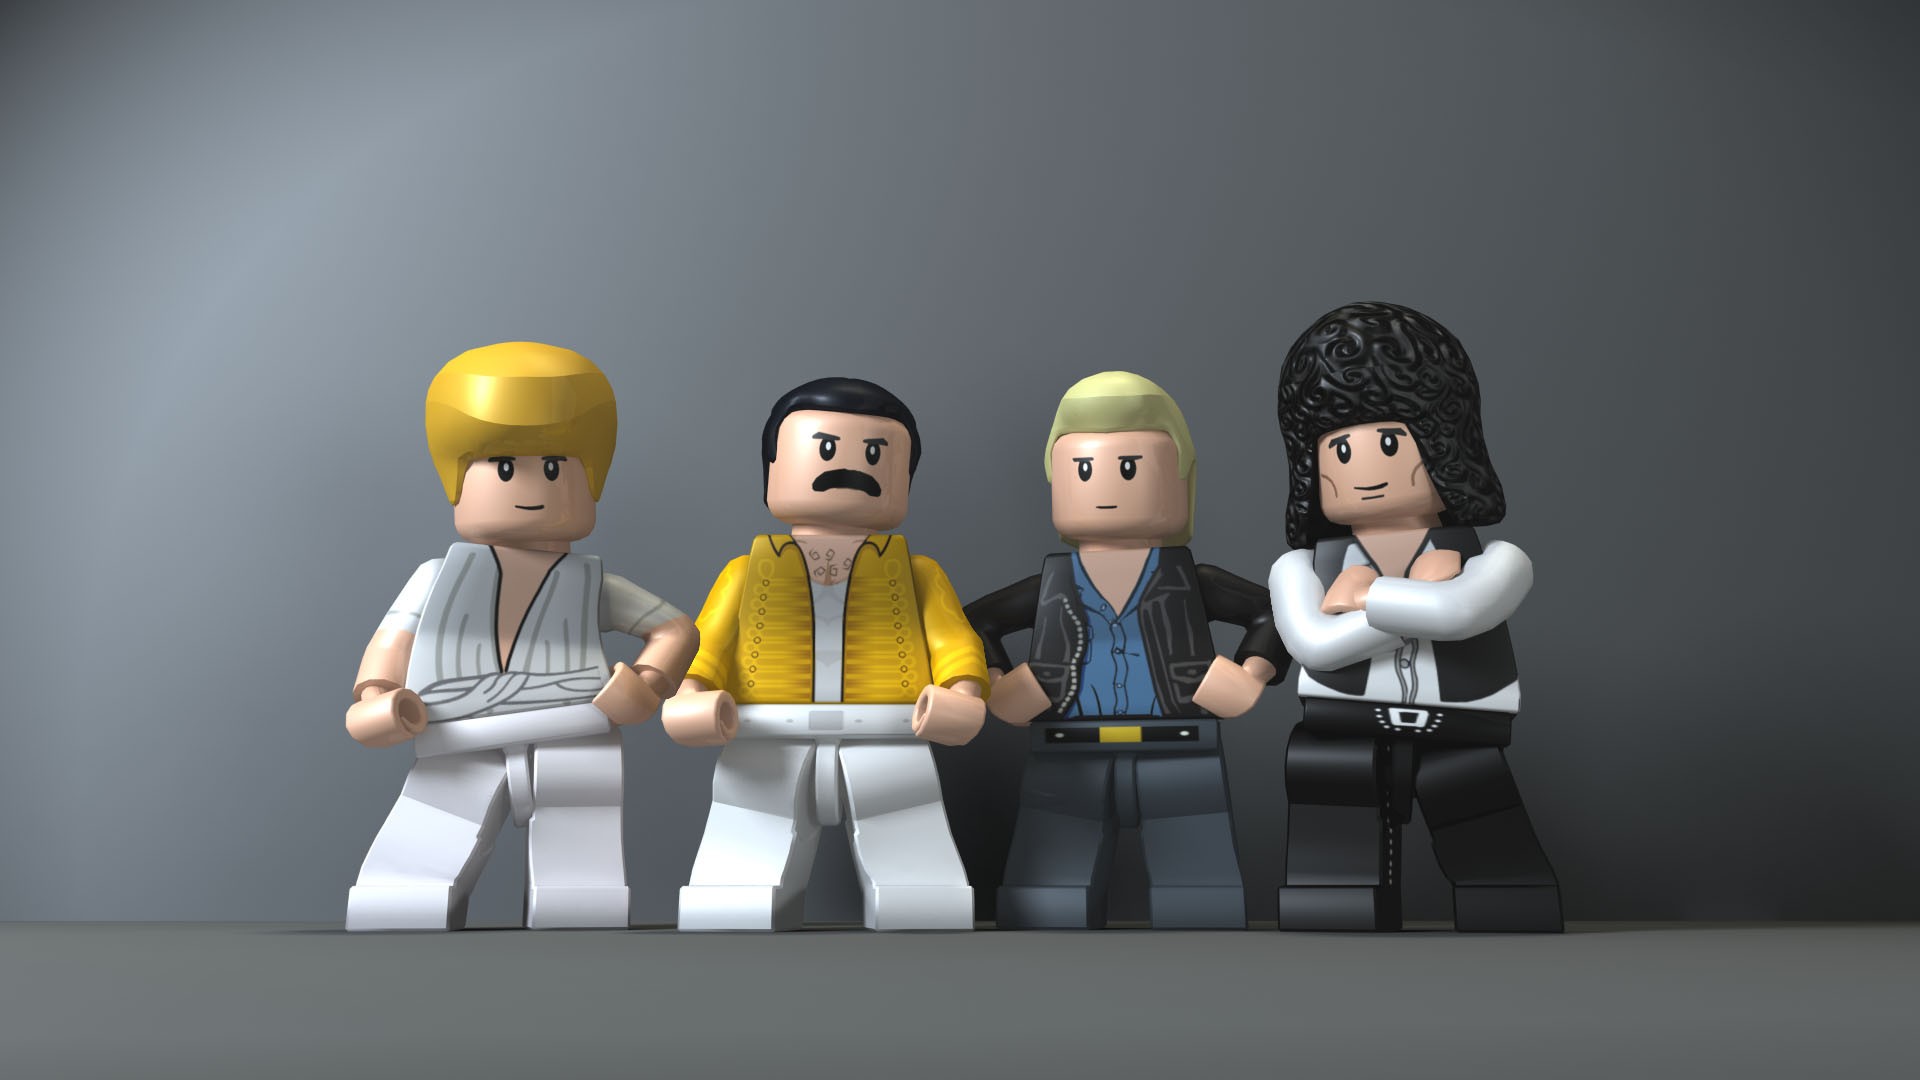 Gray Background Digital Art LEGO Queen Musician Freddie Mercury Brian May John Deacon Figurines Lege 1920x1080